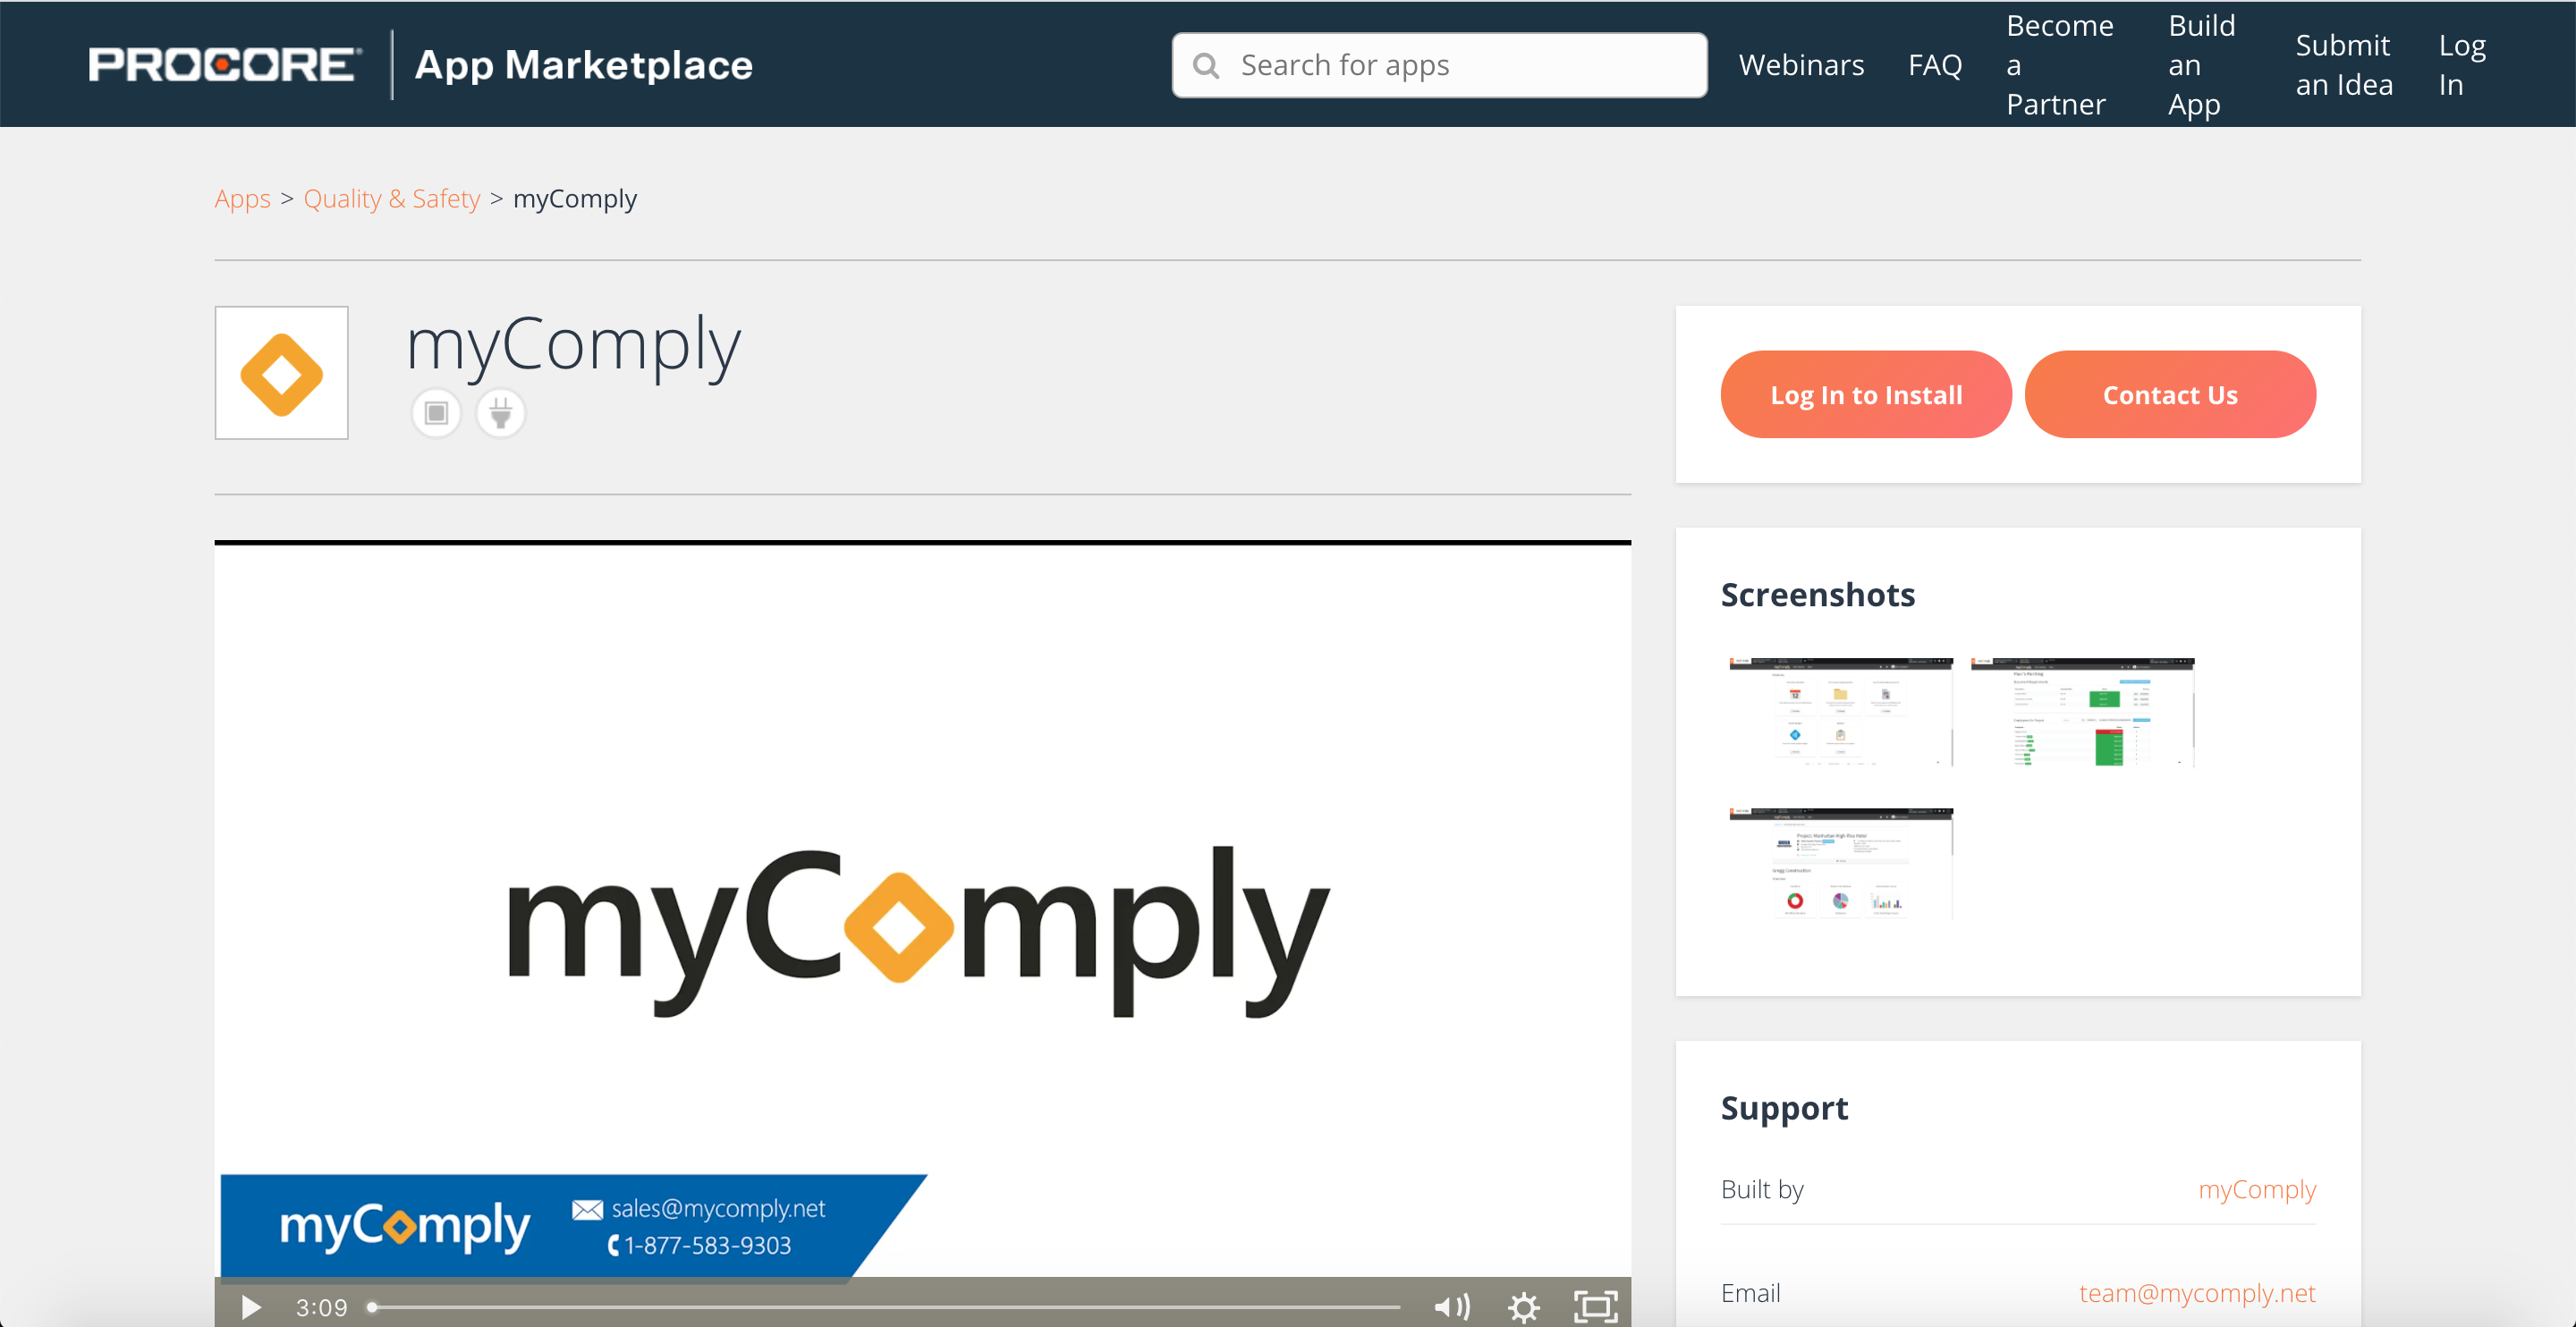 myComply-procore